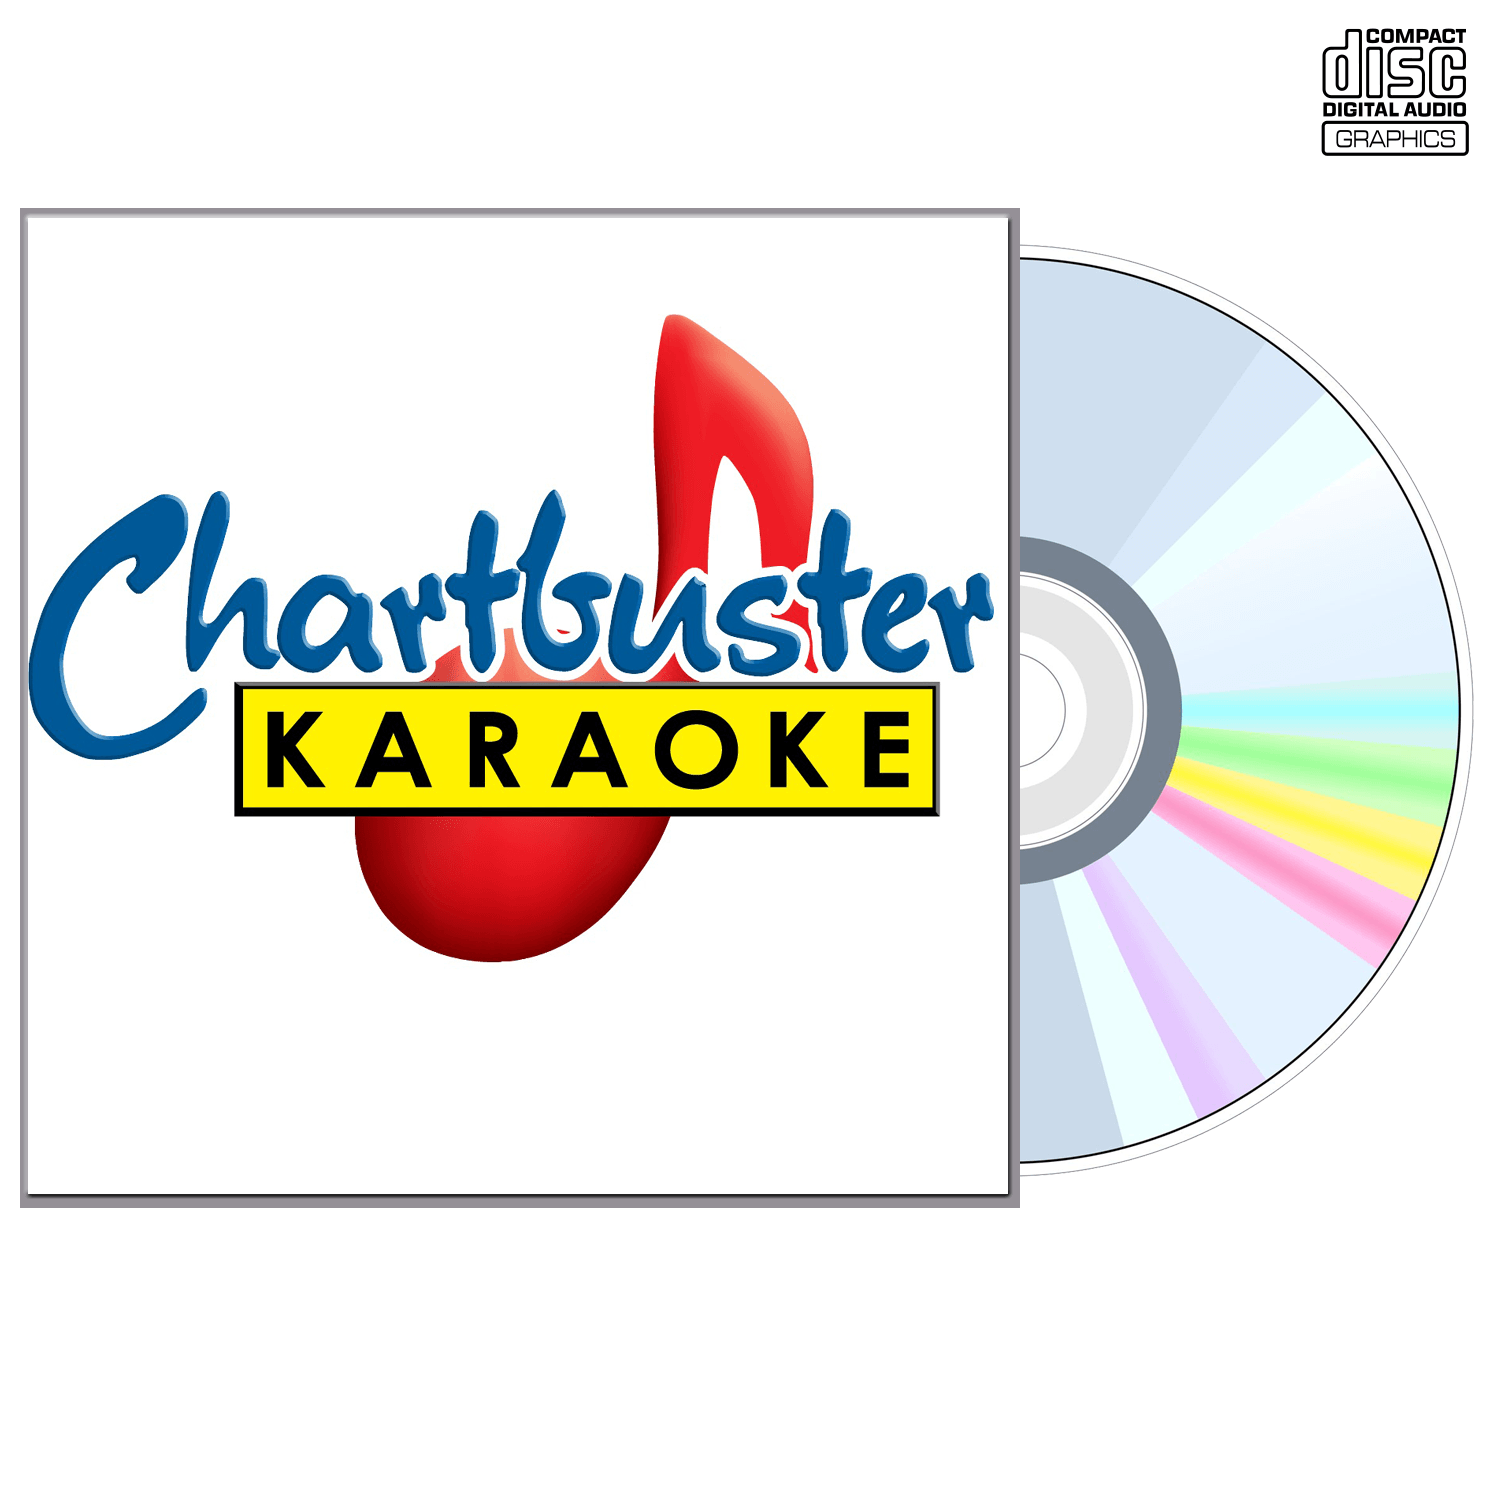 Gene Watson Vol 1 - CD+G - Chartbuster Karaoke - Karaoke Home Entertainment